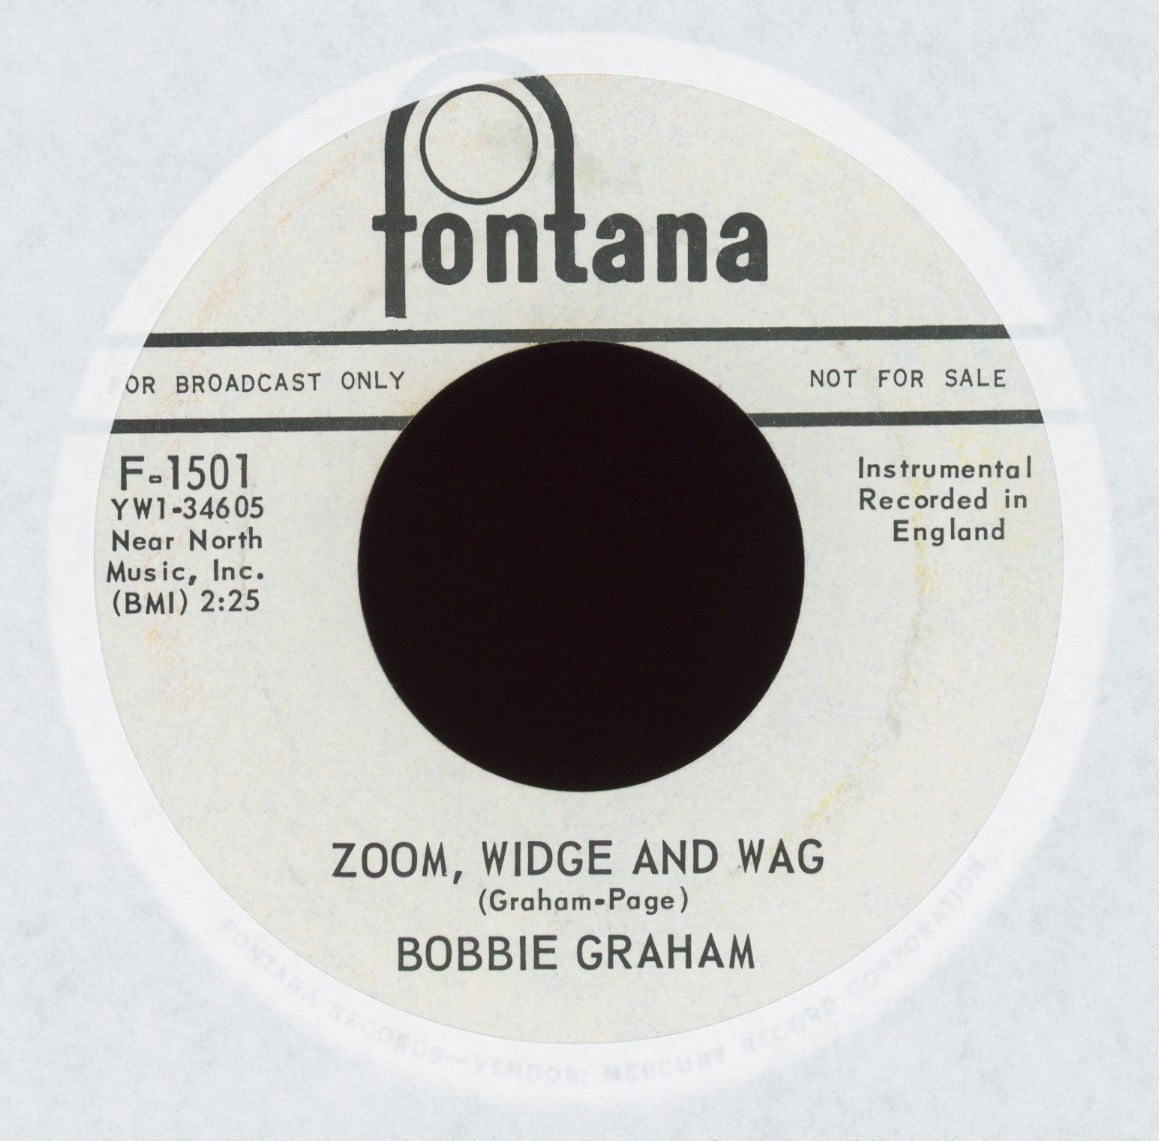 Bobby Graham - Zoom, Widge And Wag on Fontana Promo Jimmy Page